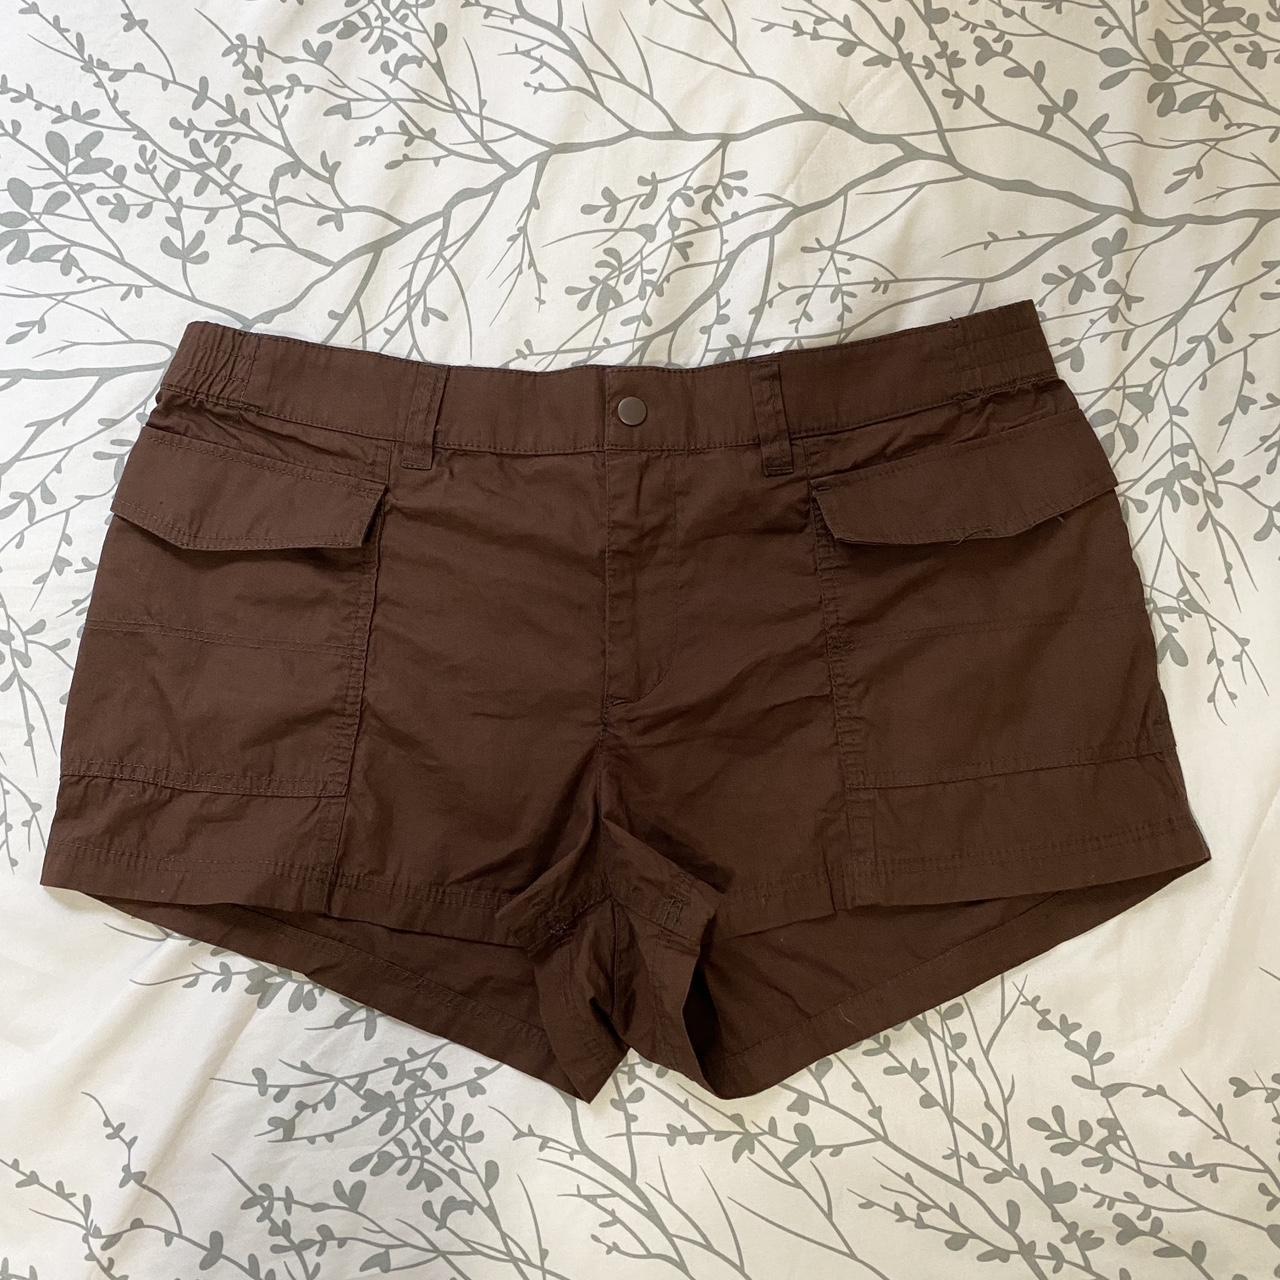 H&M brown cargo shorts #cargo #cargopants... - Depop